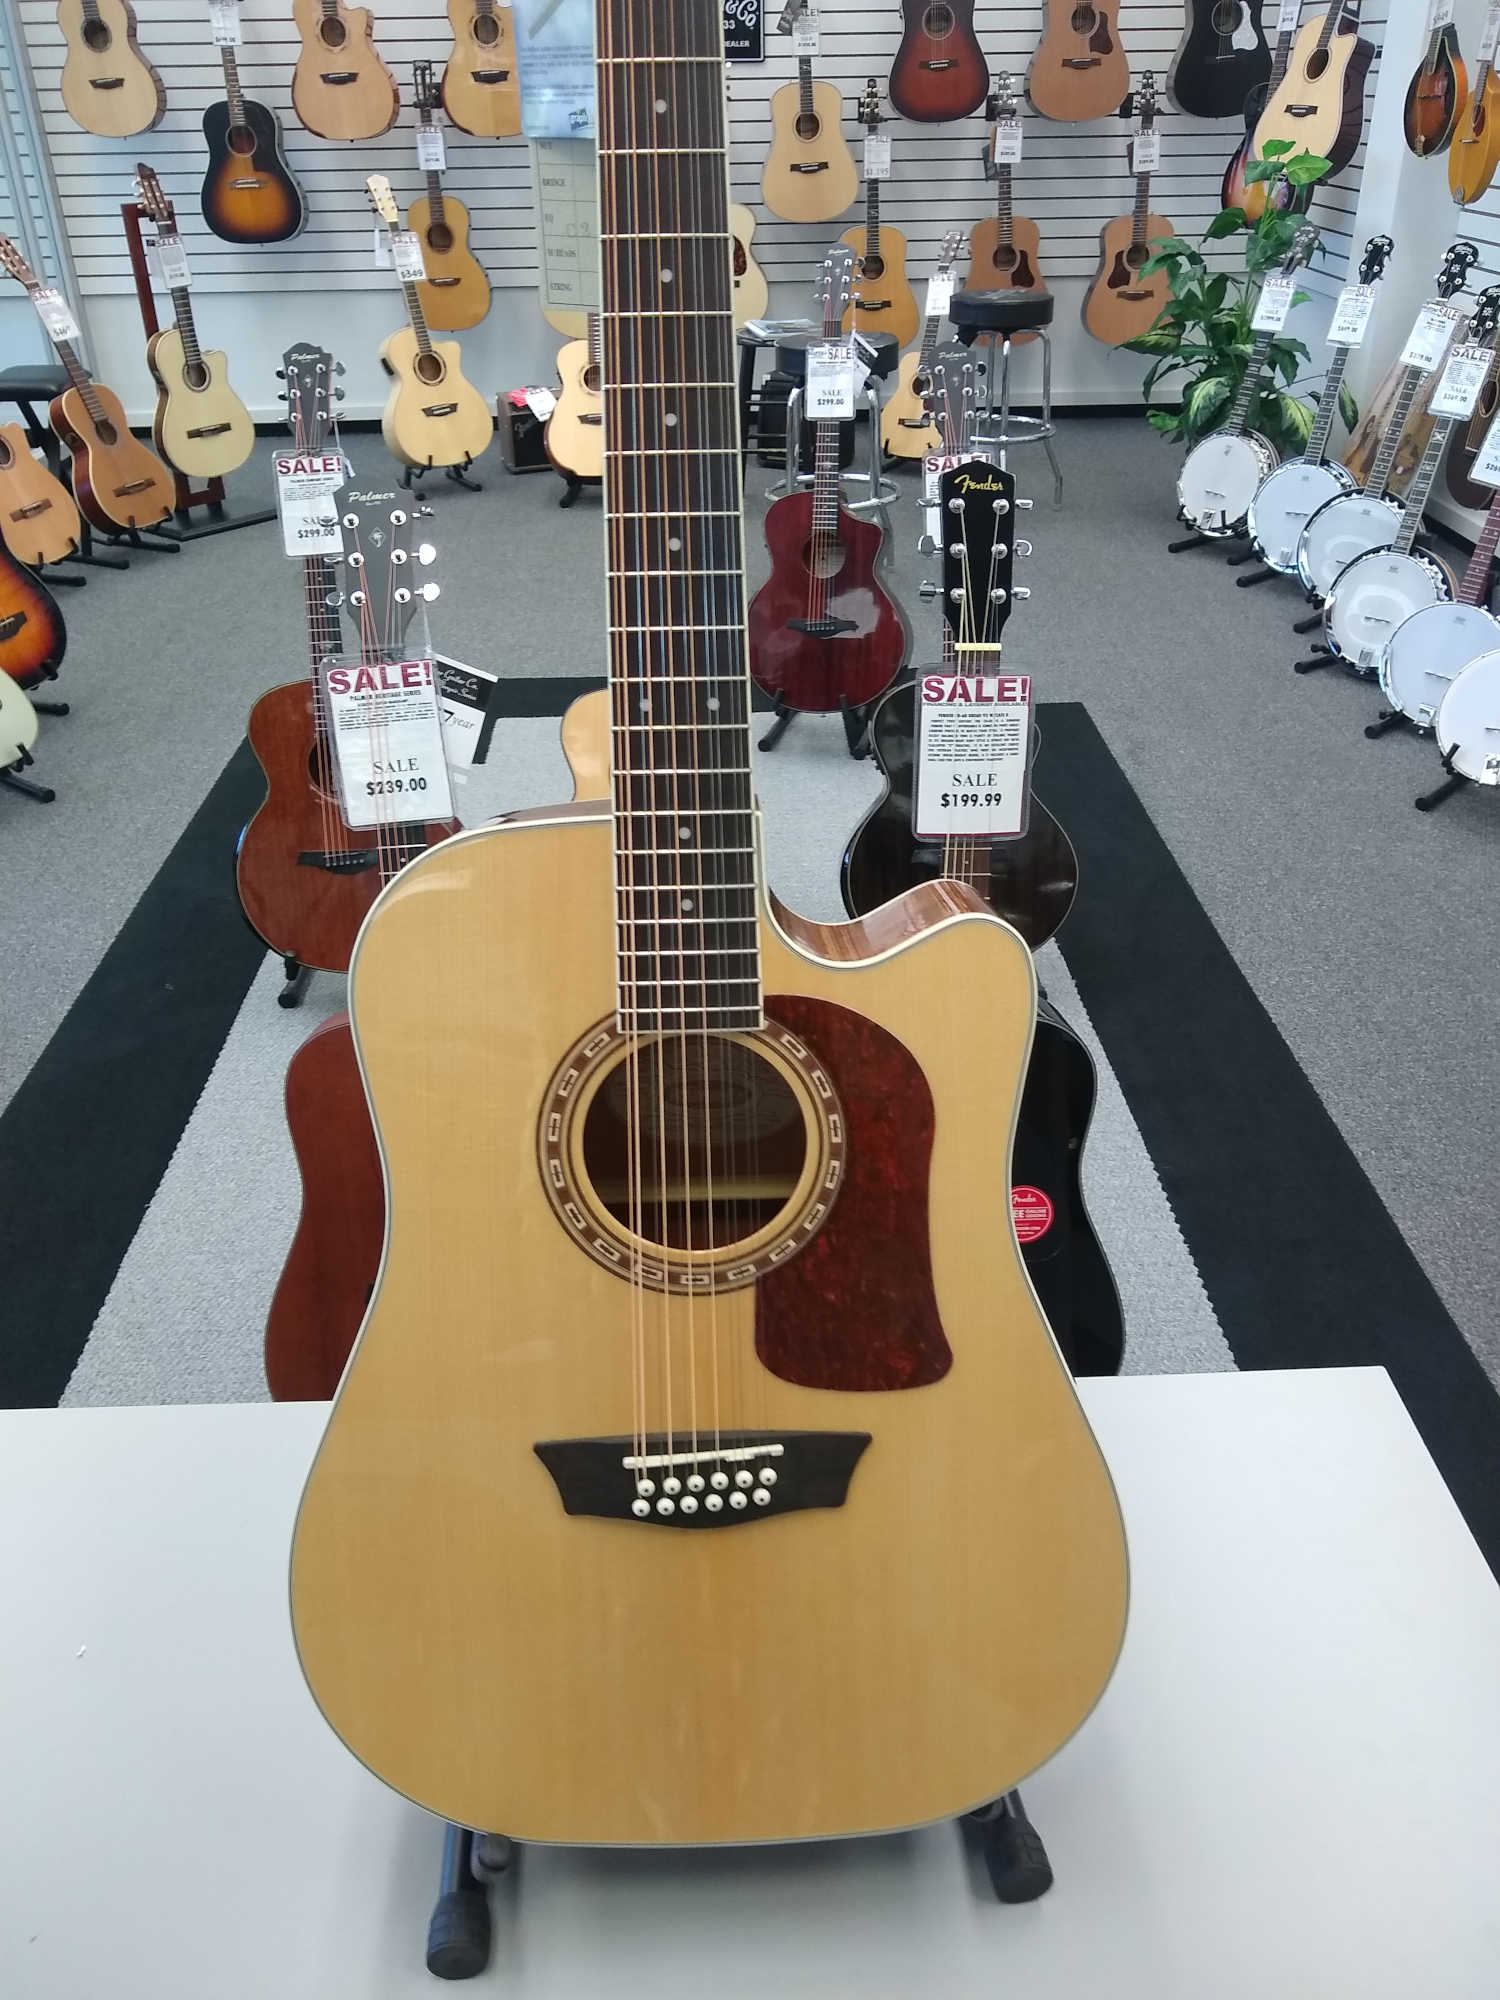 Washburn HD10SCE 12 String Acoustic Guitar